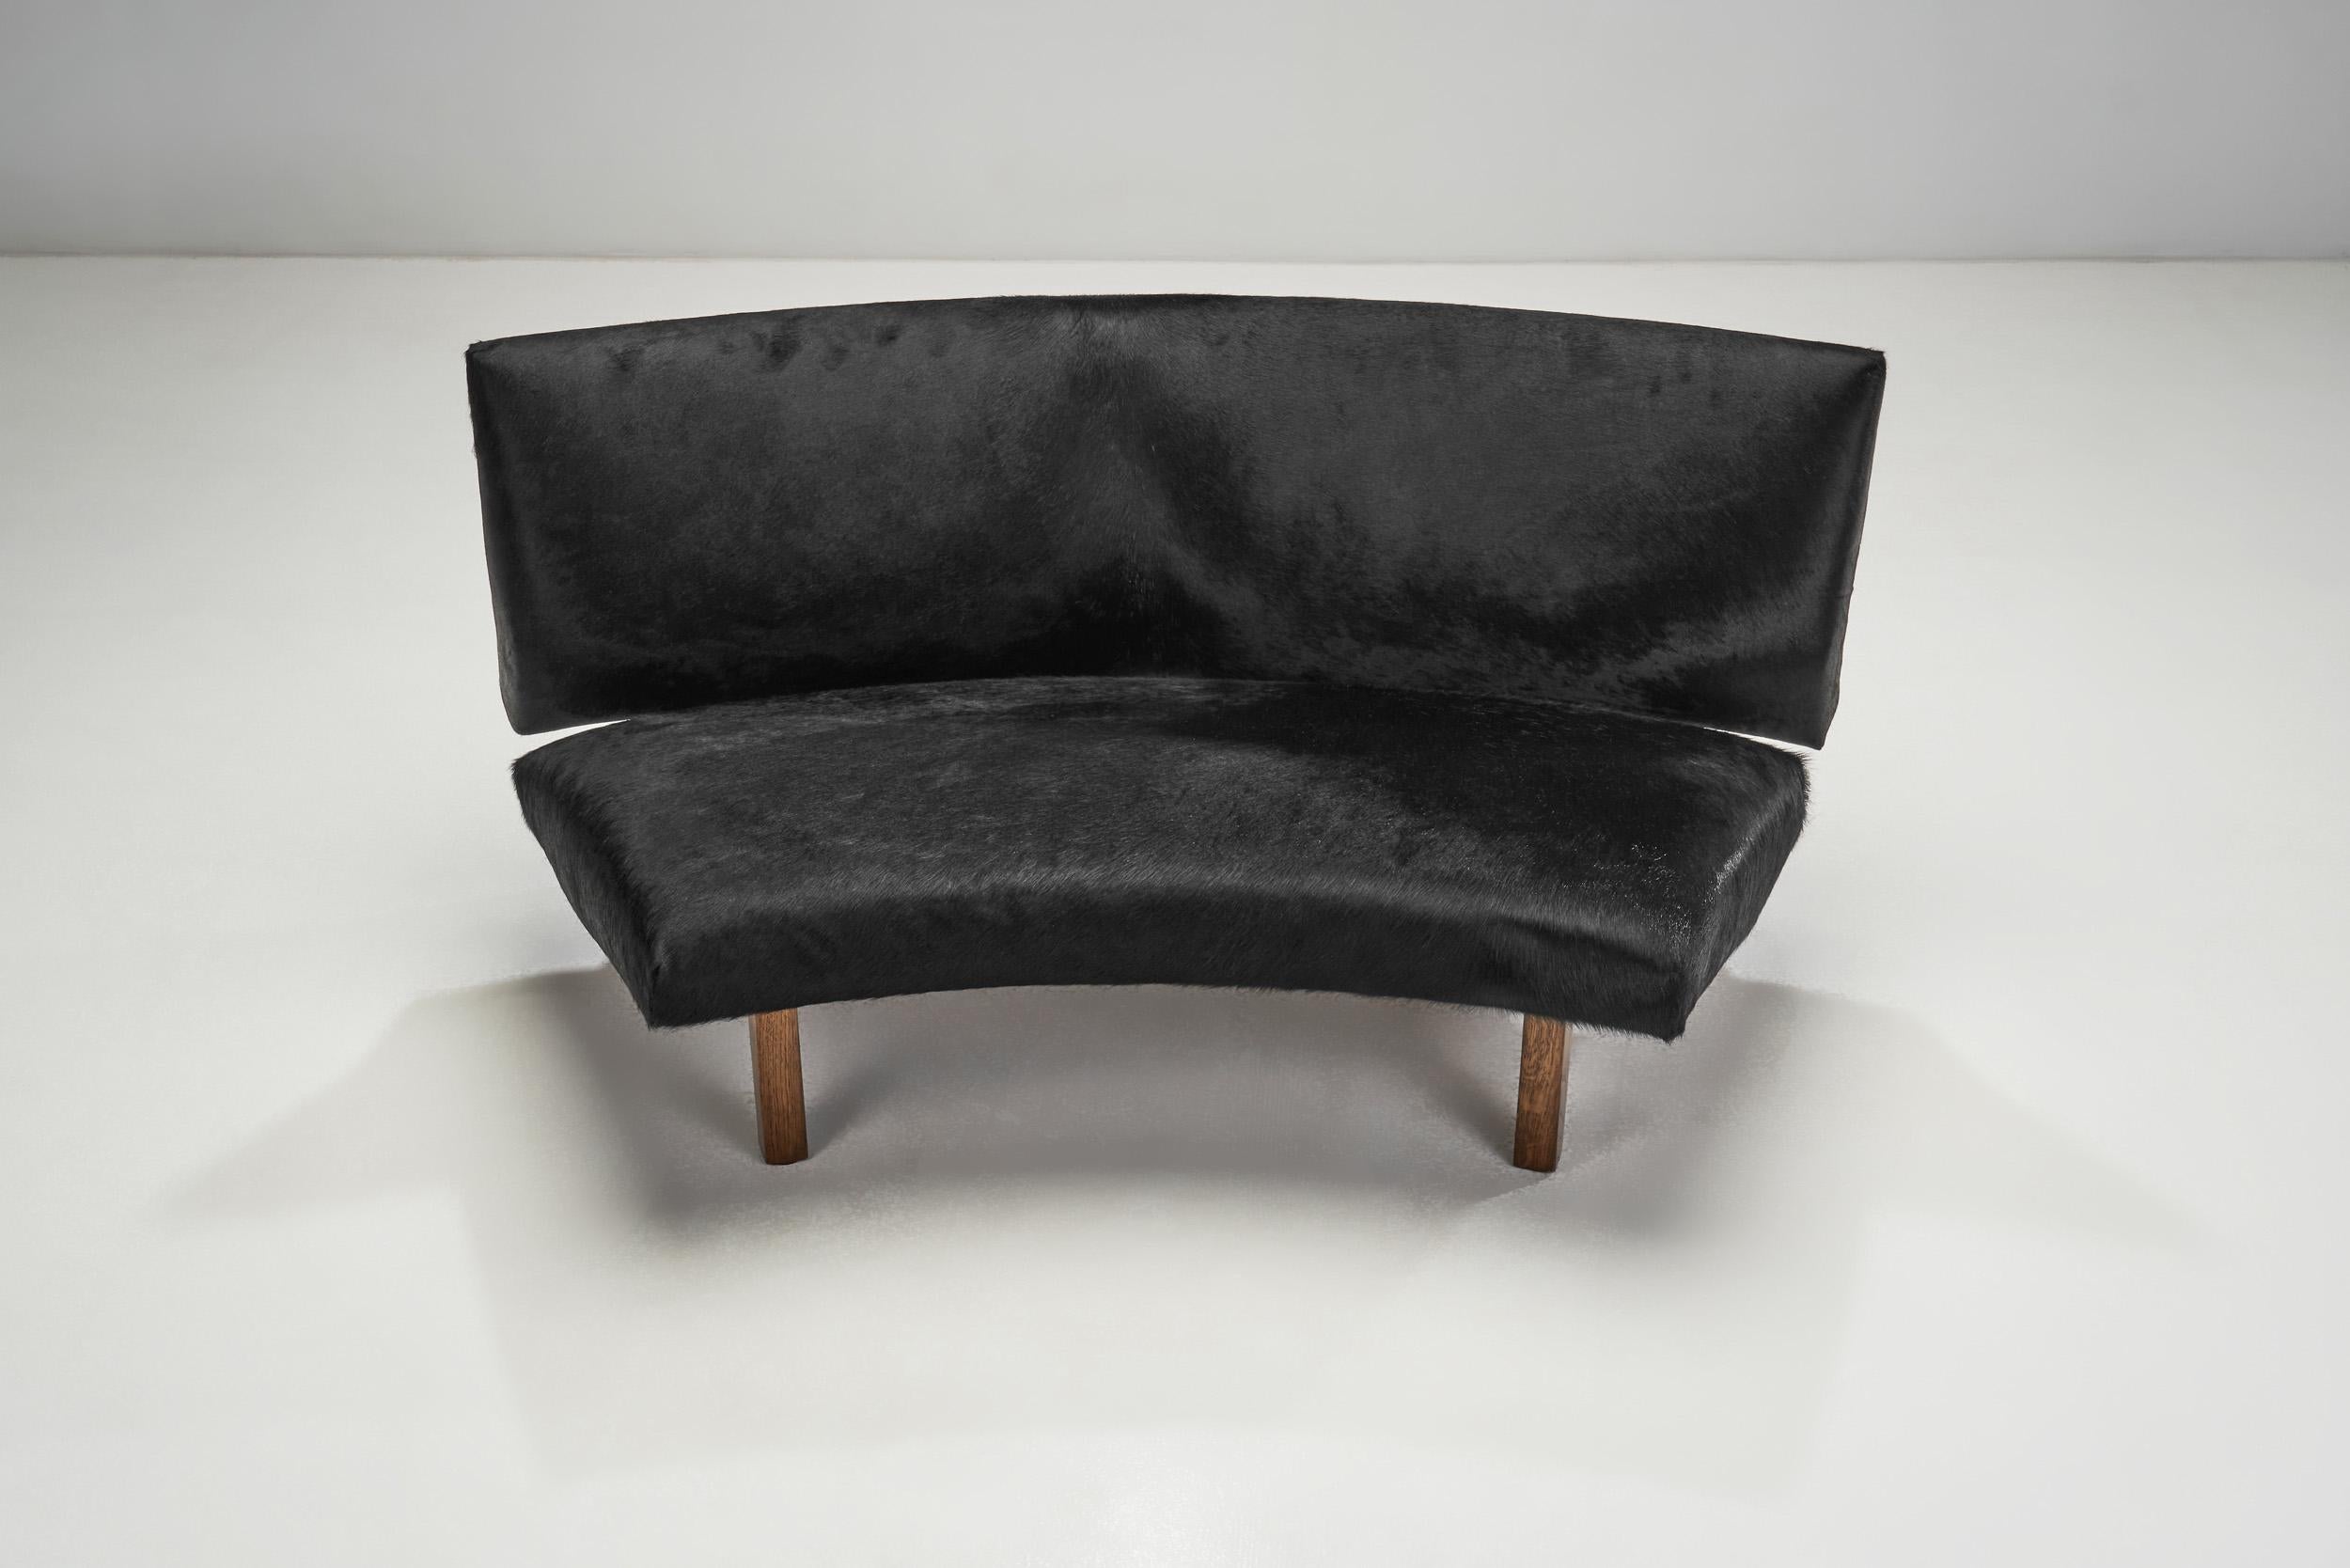 Mid-20th Century European Mid-Century Sofa in Black Cow Hide, Europe ca 1950s For Sale